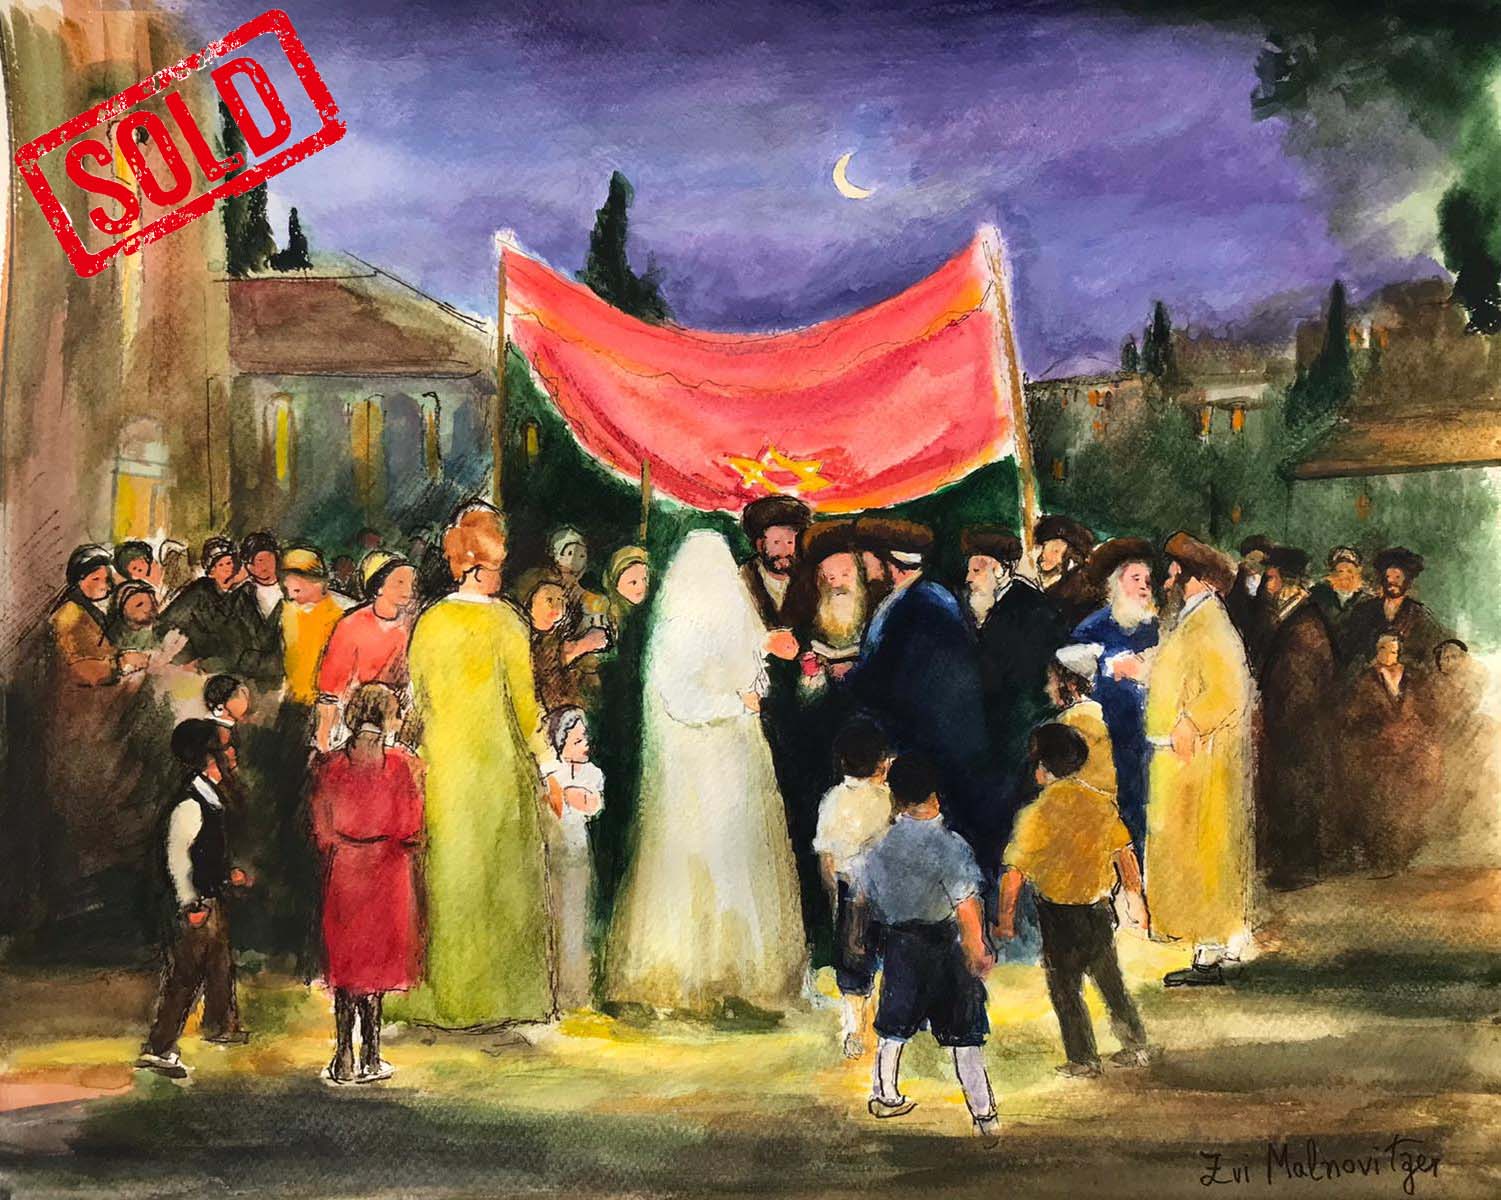 Zvi Malnovitzer - Jewish wedding - Kings gallery - Fine art - Jerusalem - Gallery - Sold.